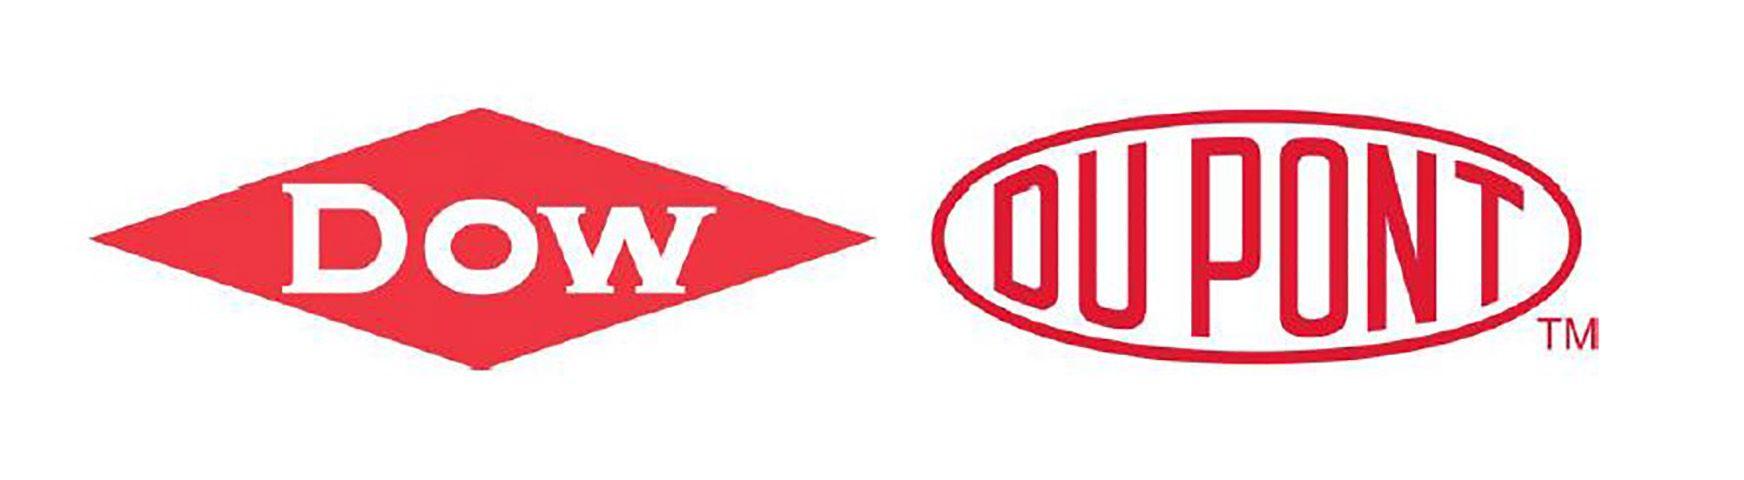 Dow Logo - Dow DuPont logos - Dow Agrosciences